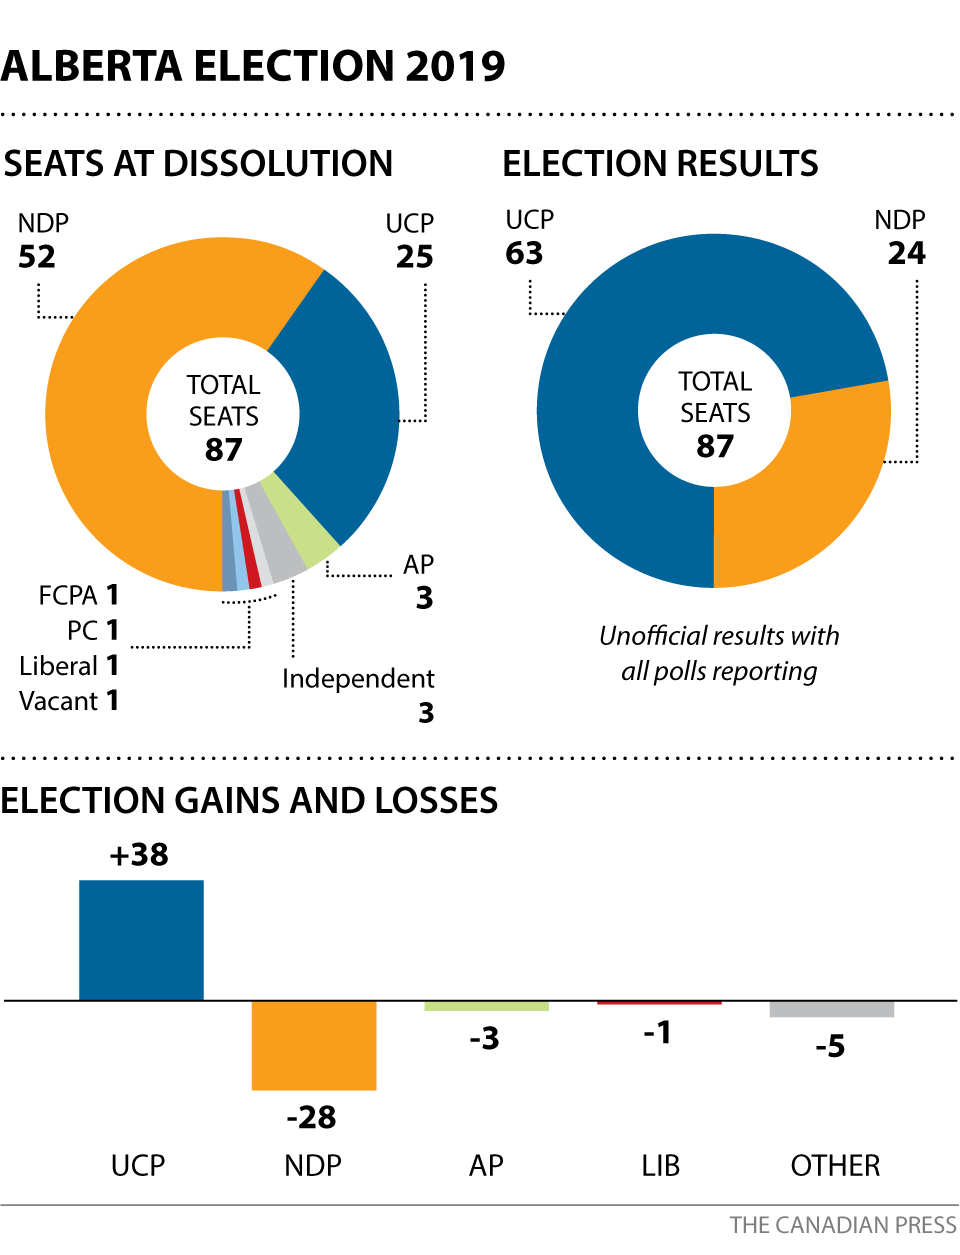 ALBERTA ELECTION RESULTS